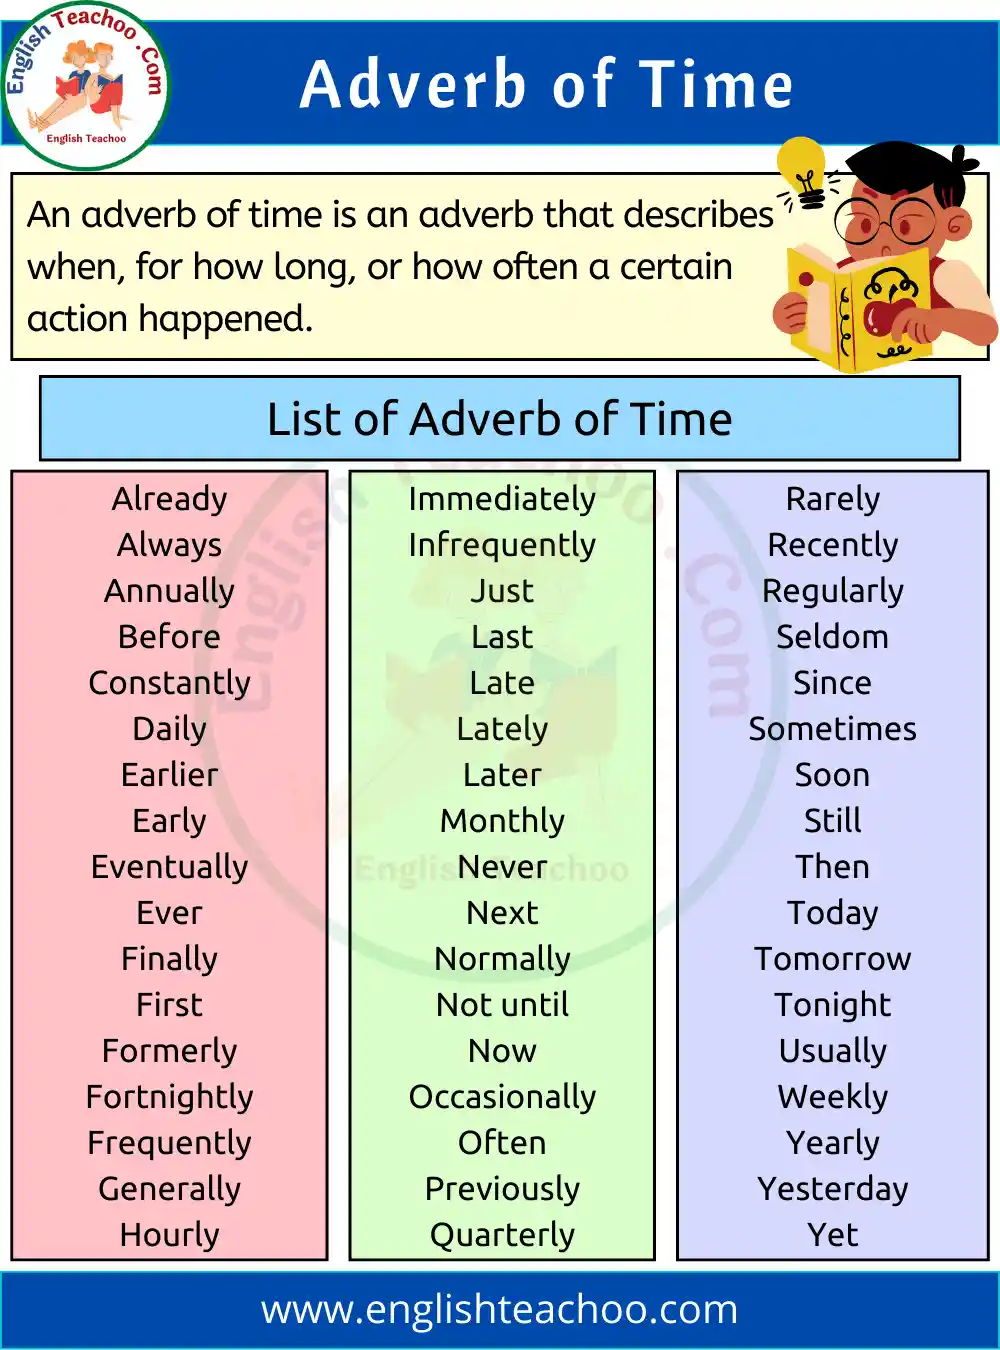 adverbs-of-time-mingle-ish